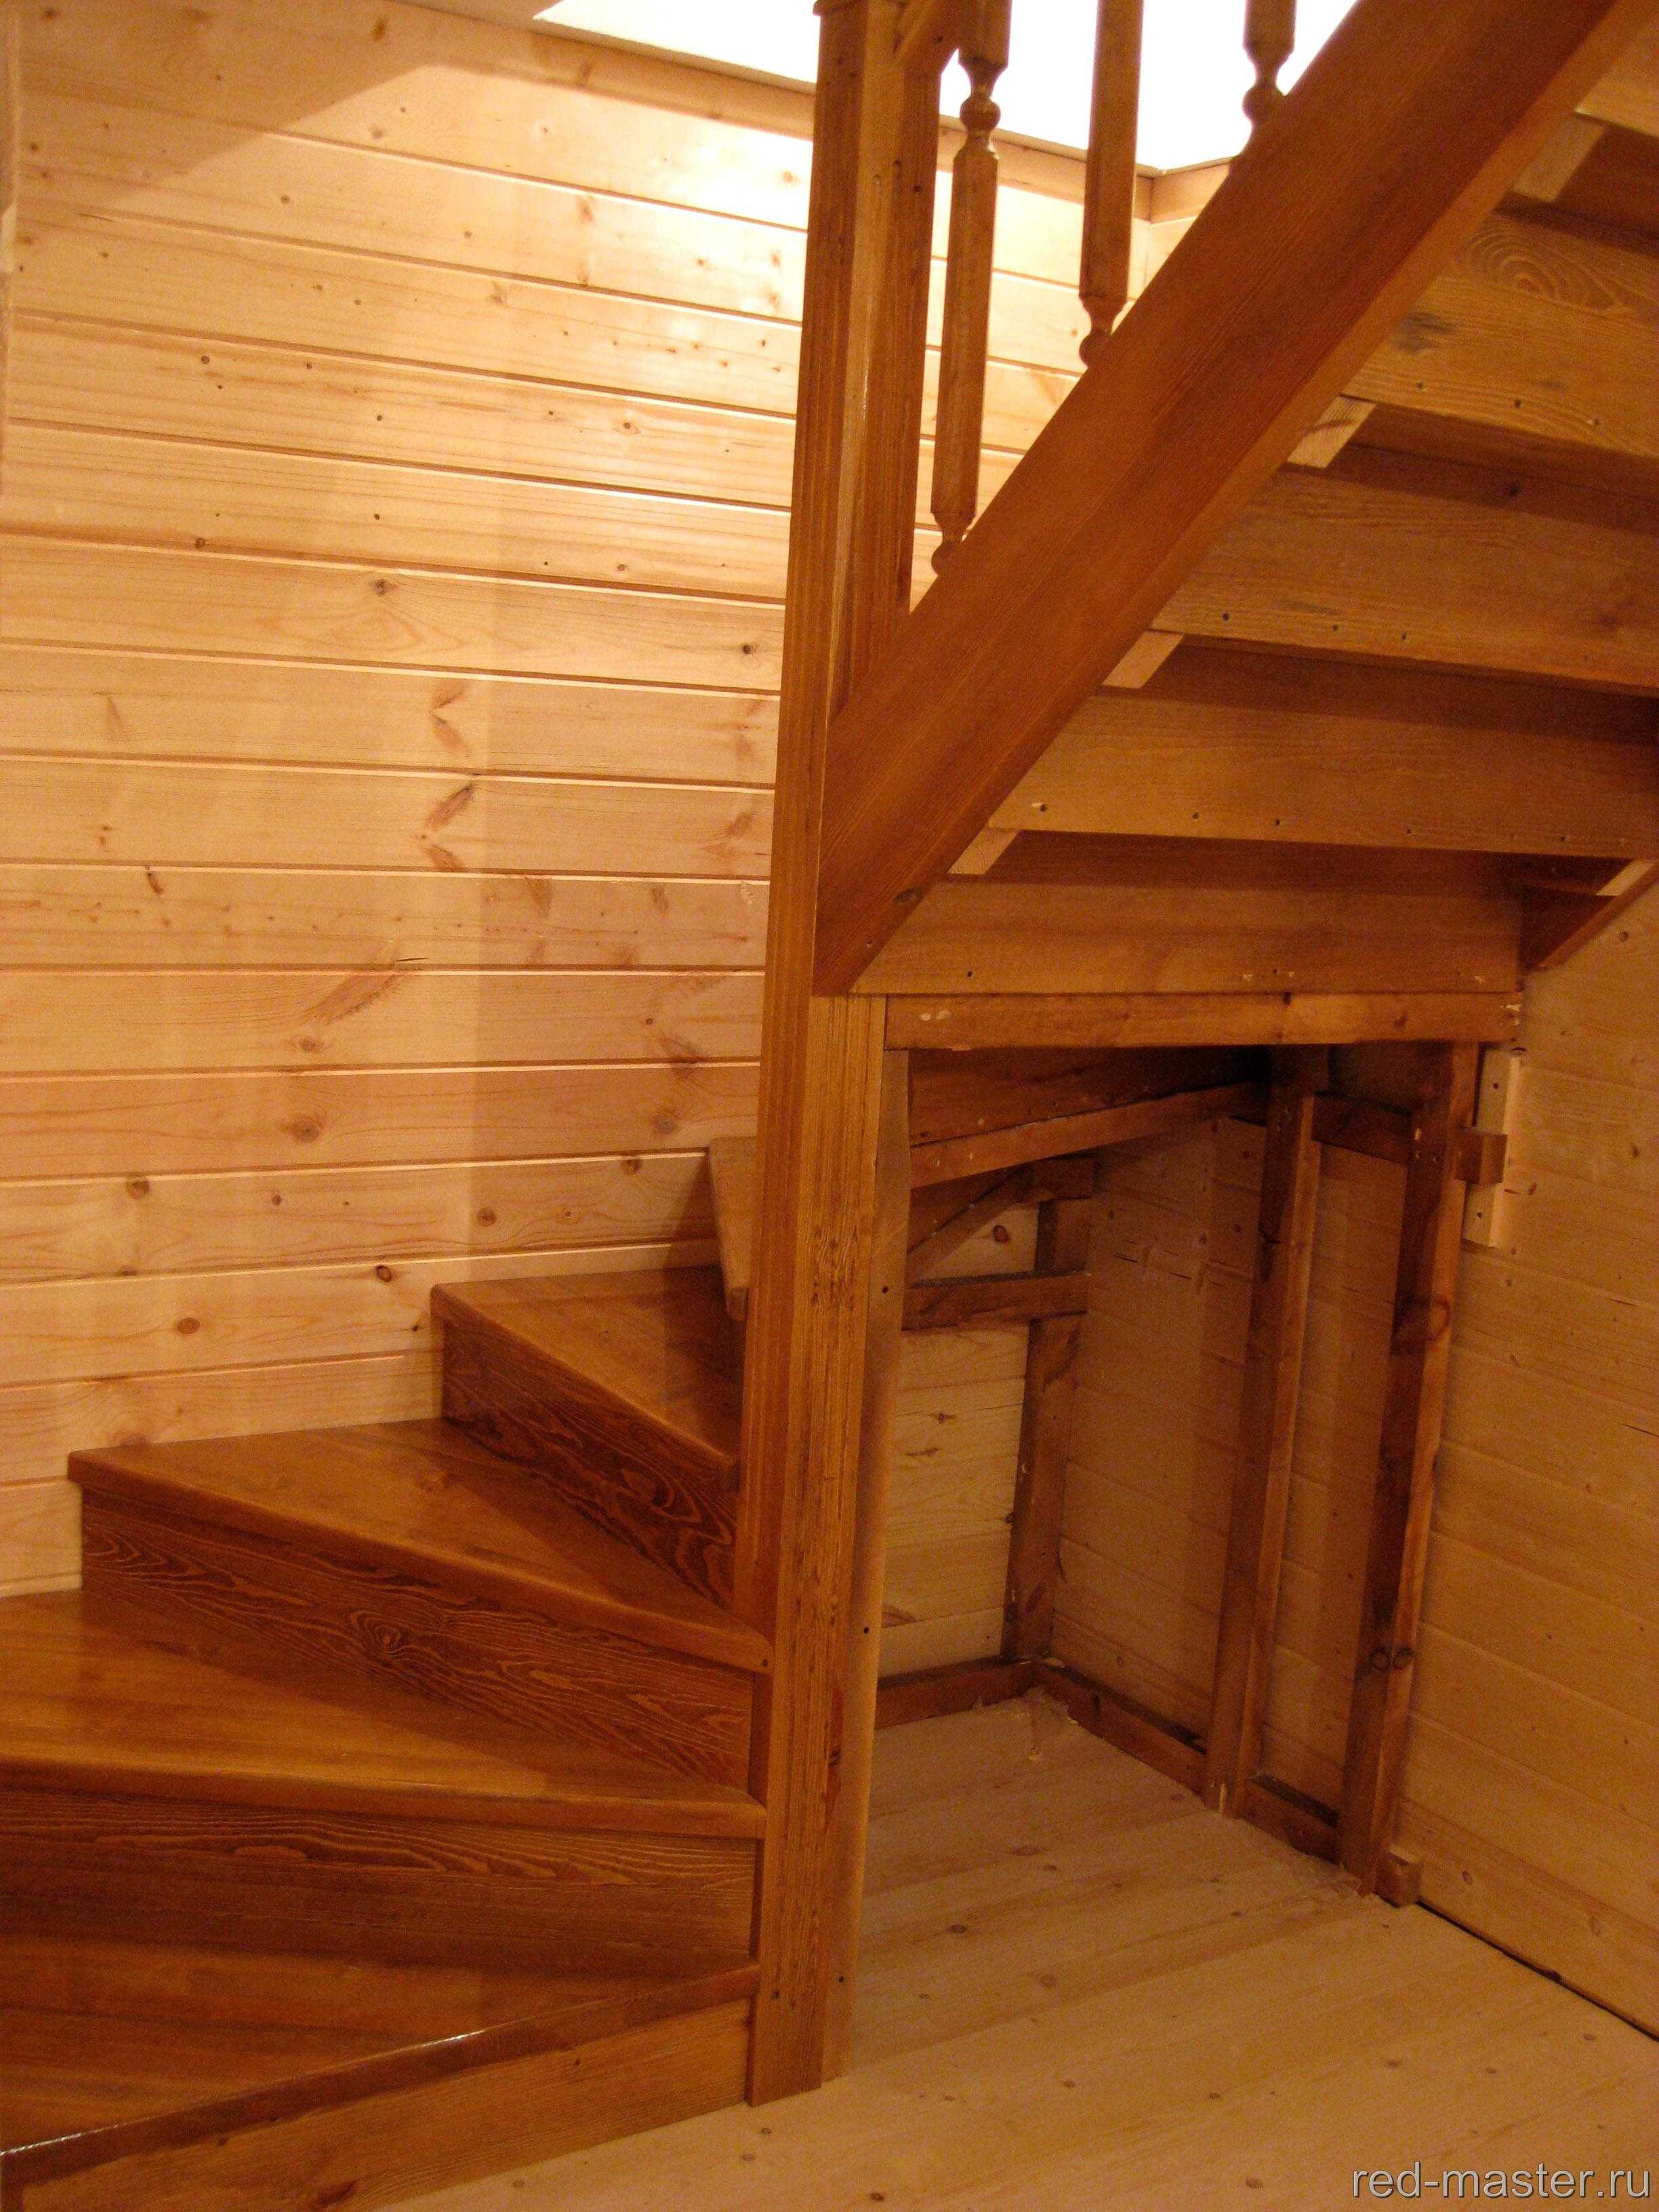 Самая простая лестница. Лестница деревянная. Лестница на второй этаж. Деревянная лестница с поворотом. Лестница деревянная на второй этаж.